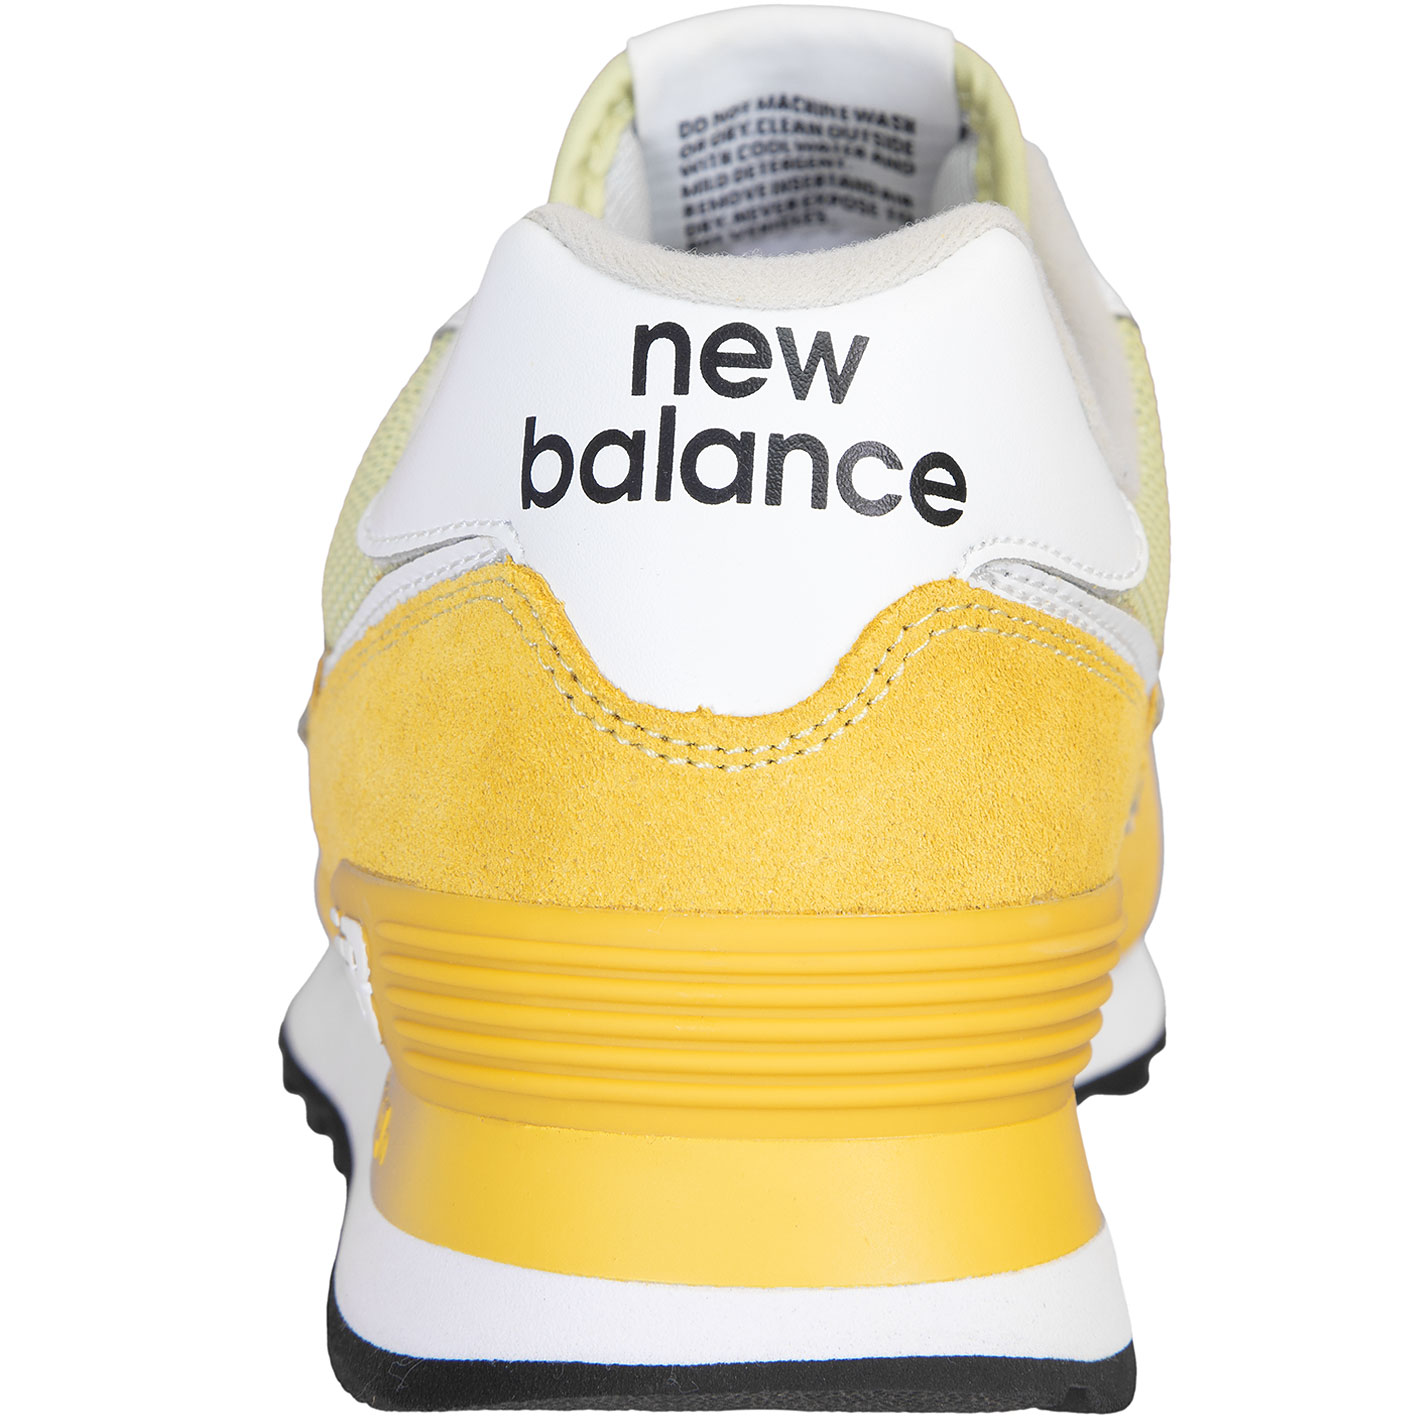 ☆ Sneaker New Balance 574 gelb - hier bestellen!